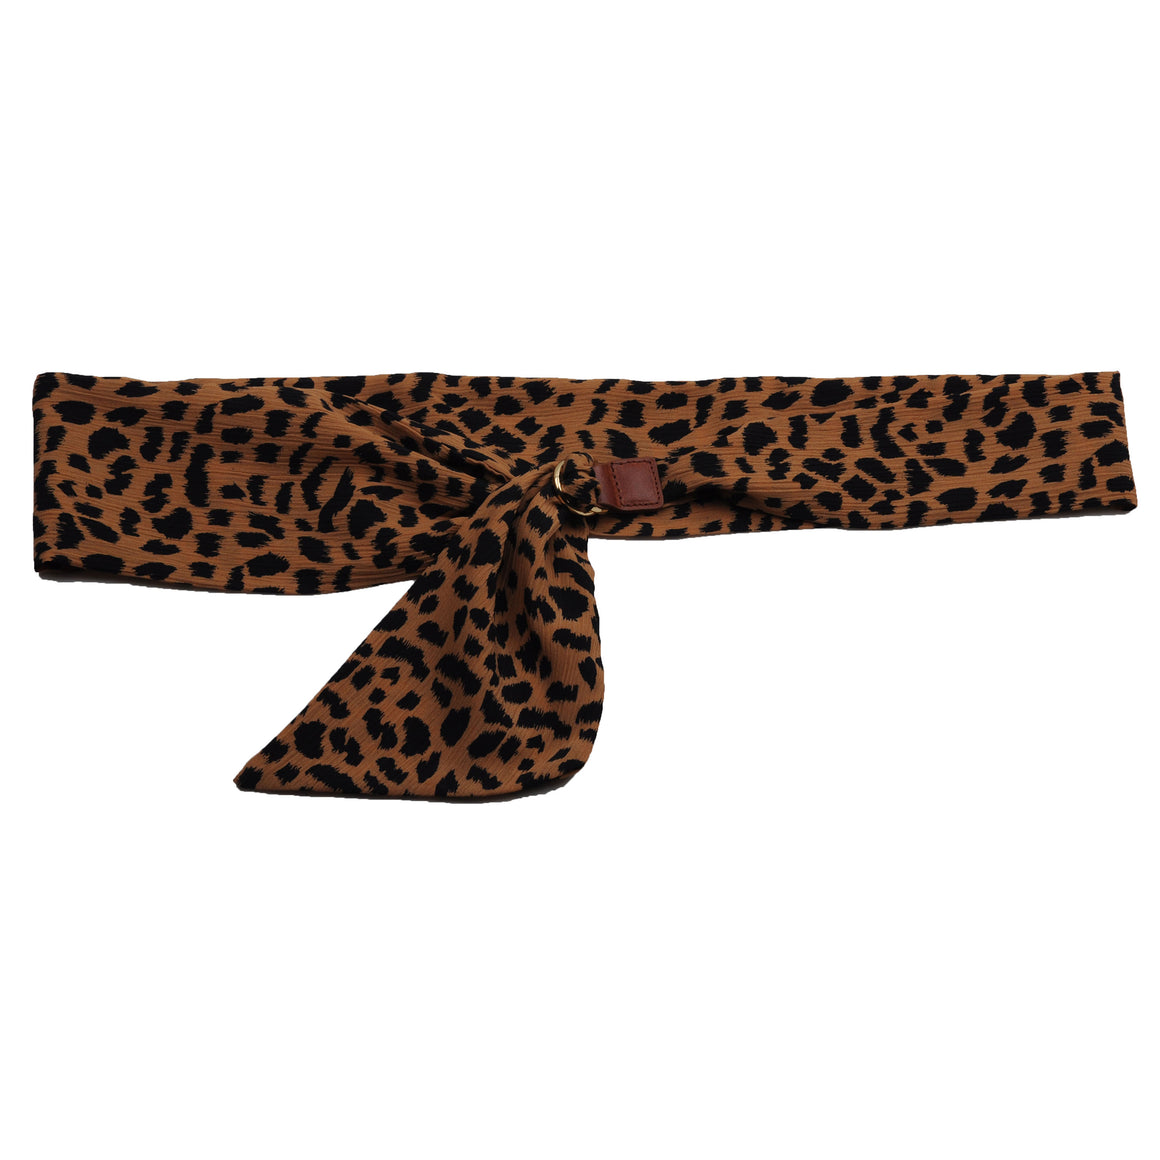 5084 - Cheetah Print Gold Ring Scarf Belt